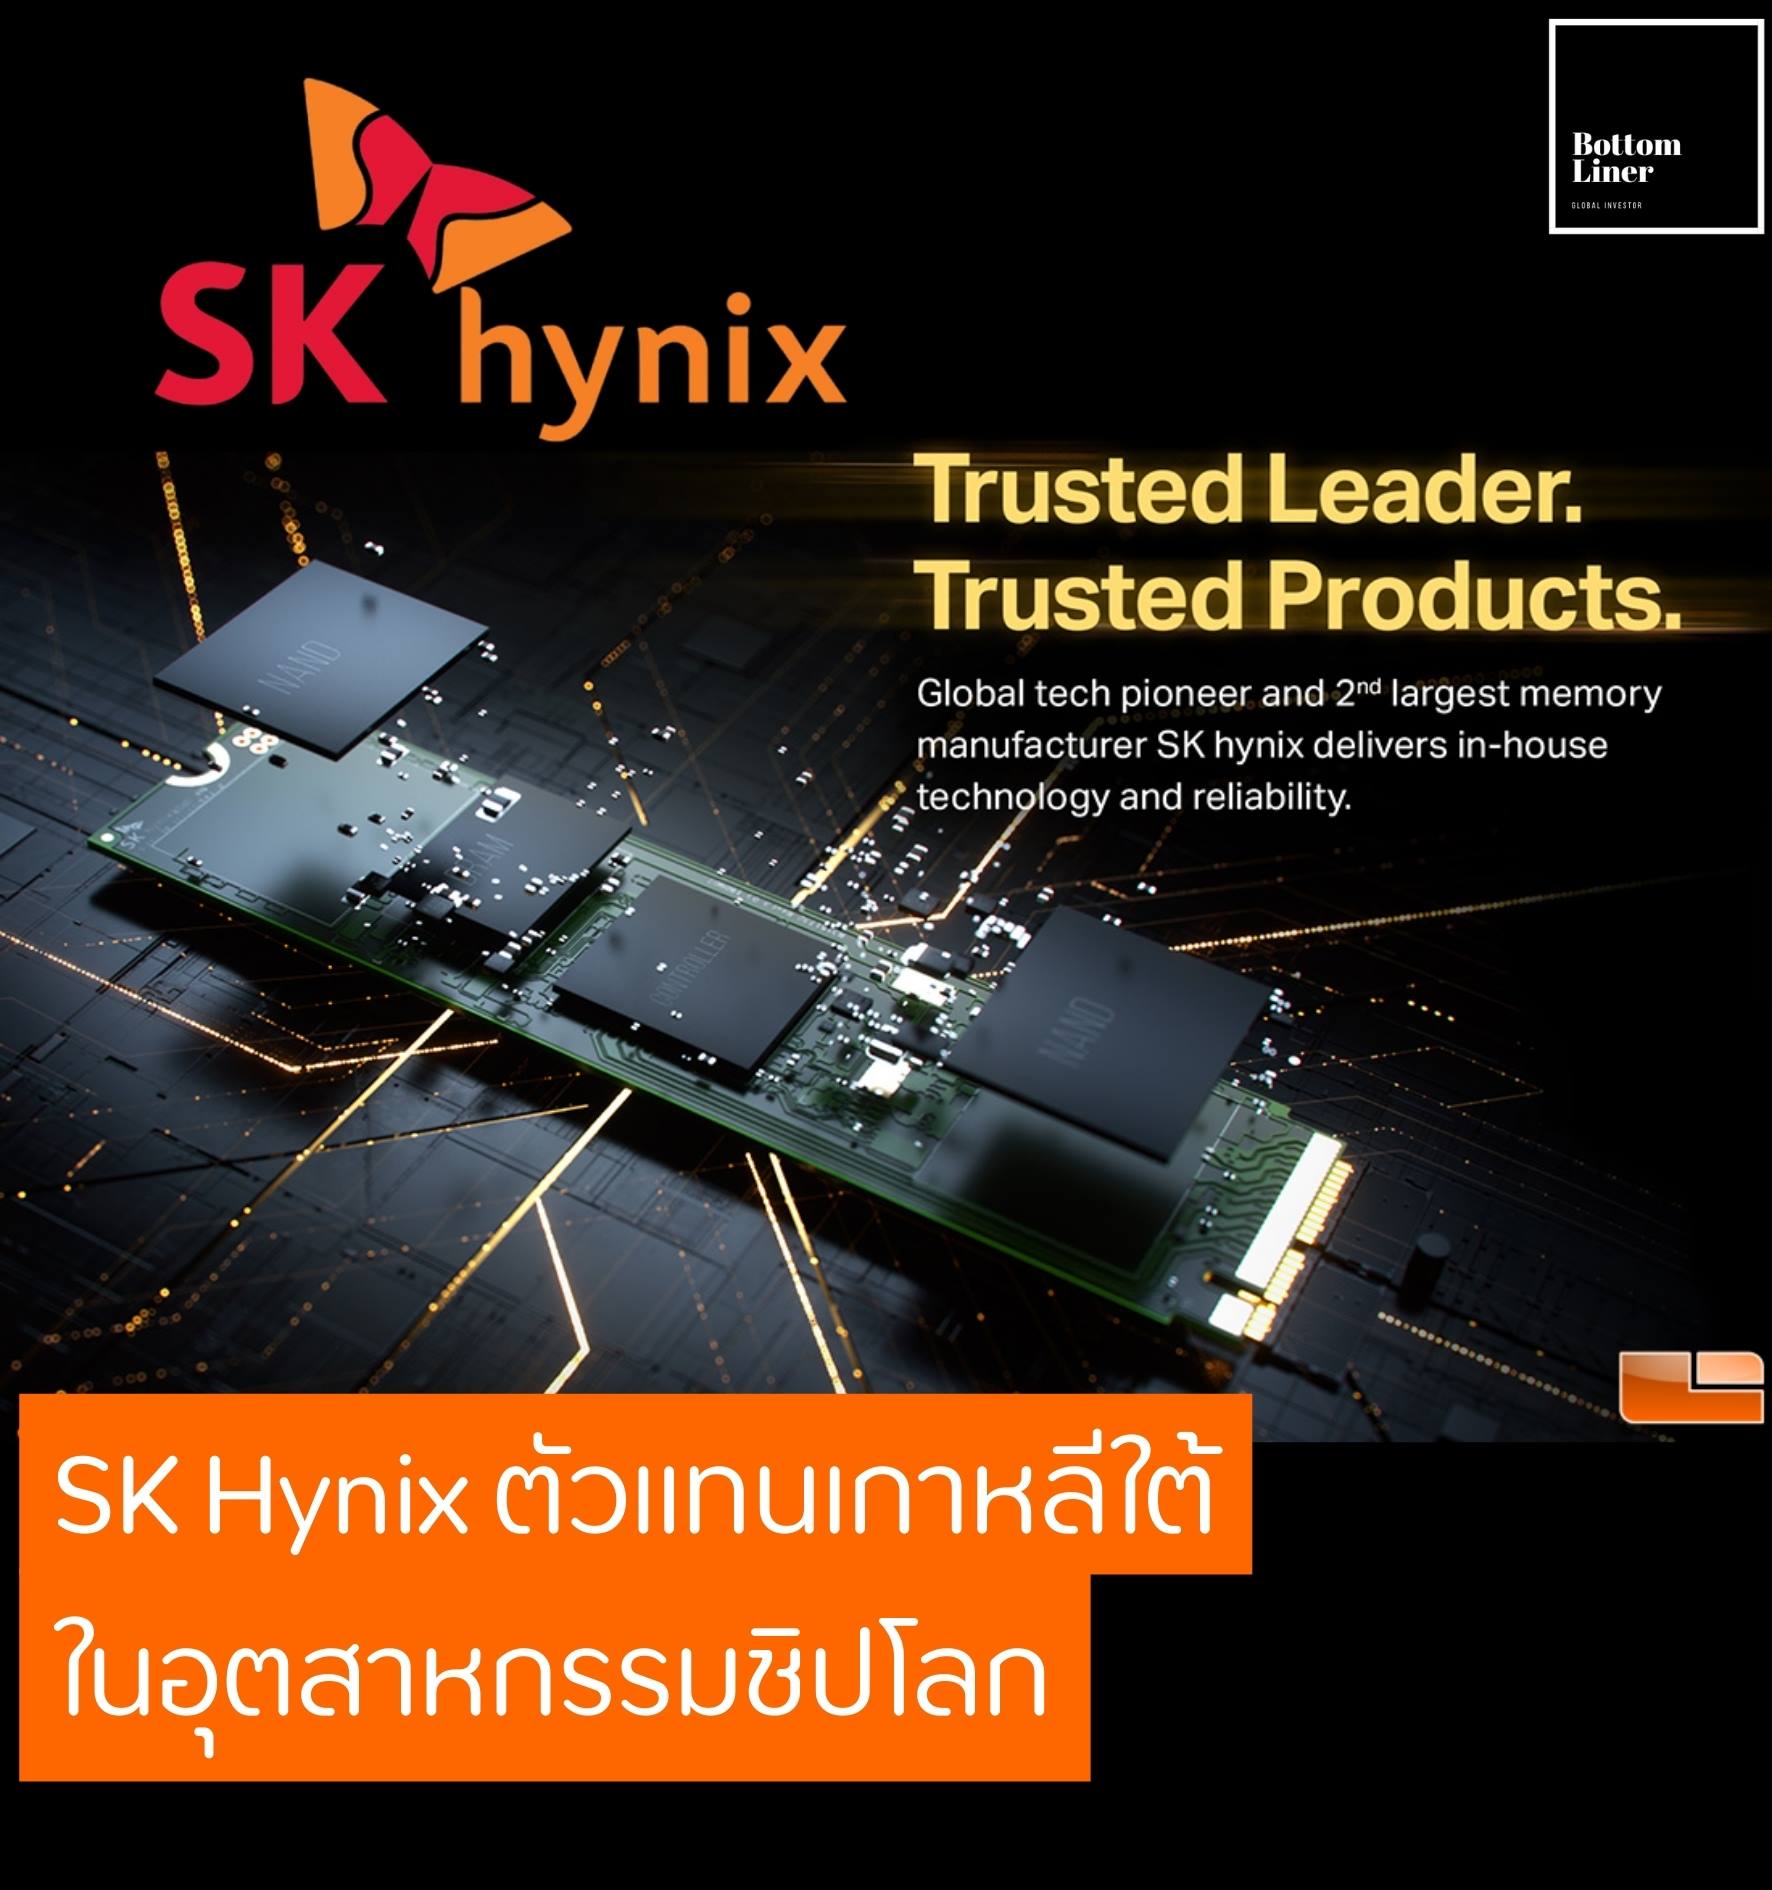 SK Hynix ตัวแทนเกาหลีใต้ในอุตสาหกรรมชิปโลก